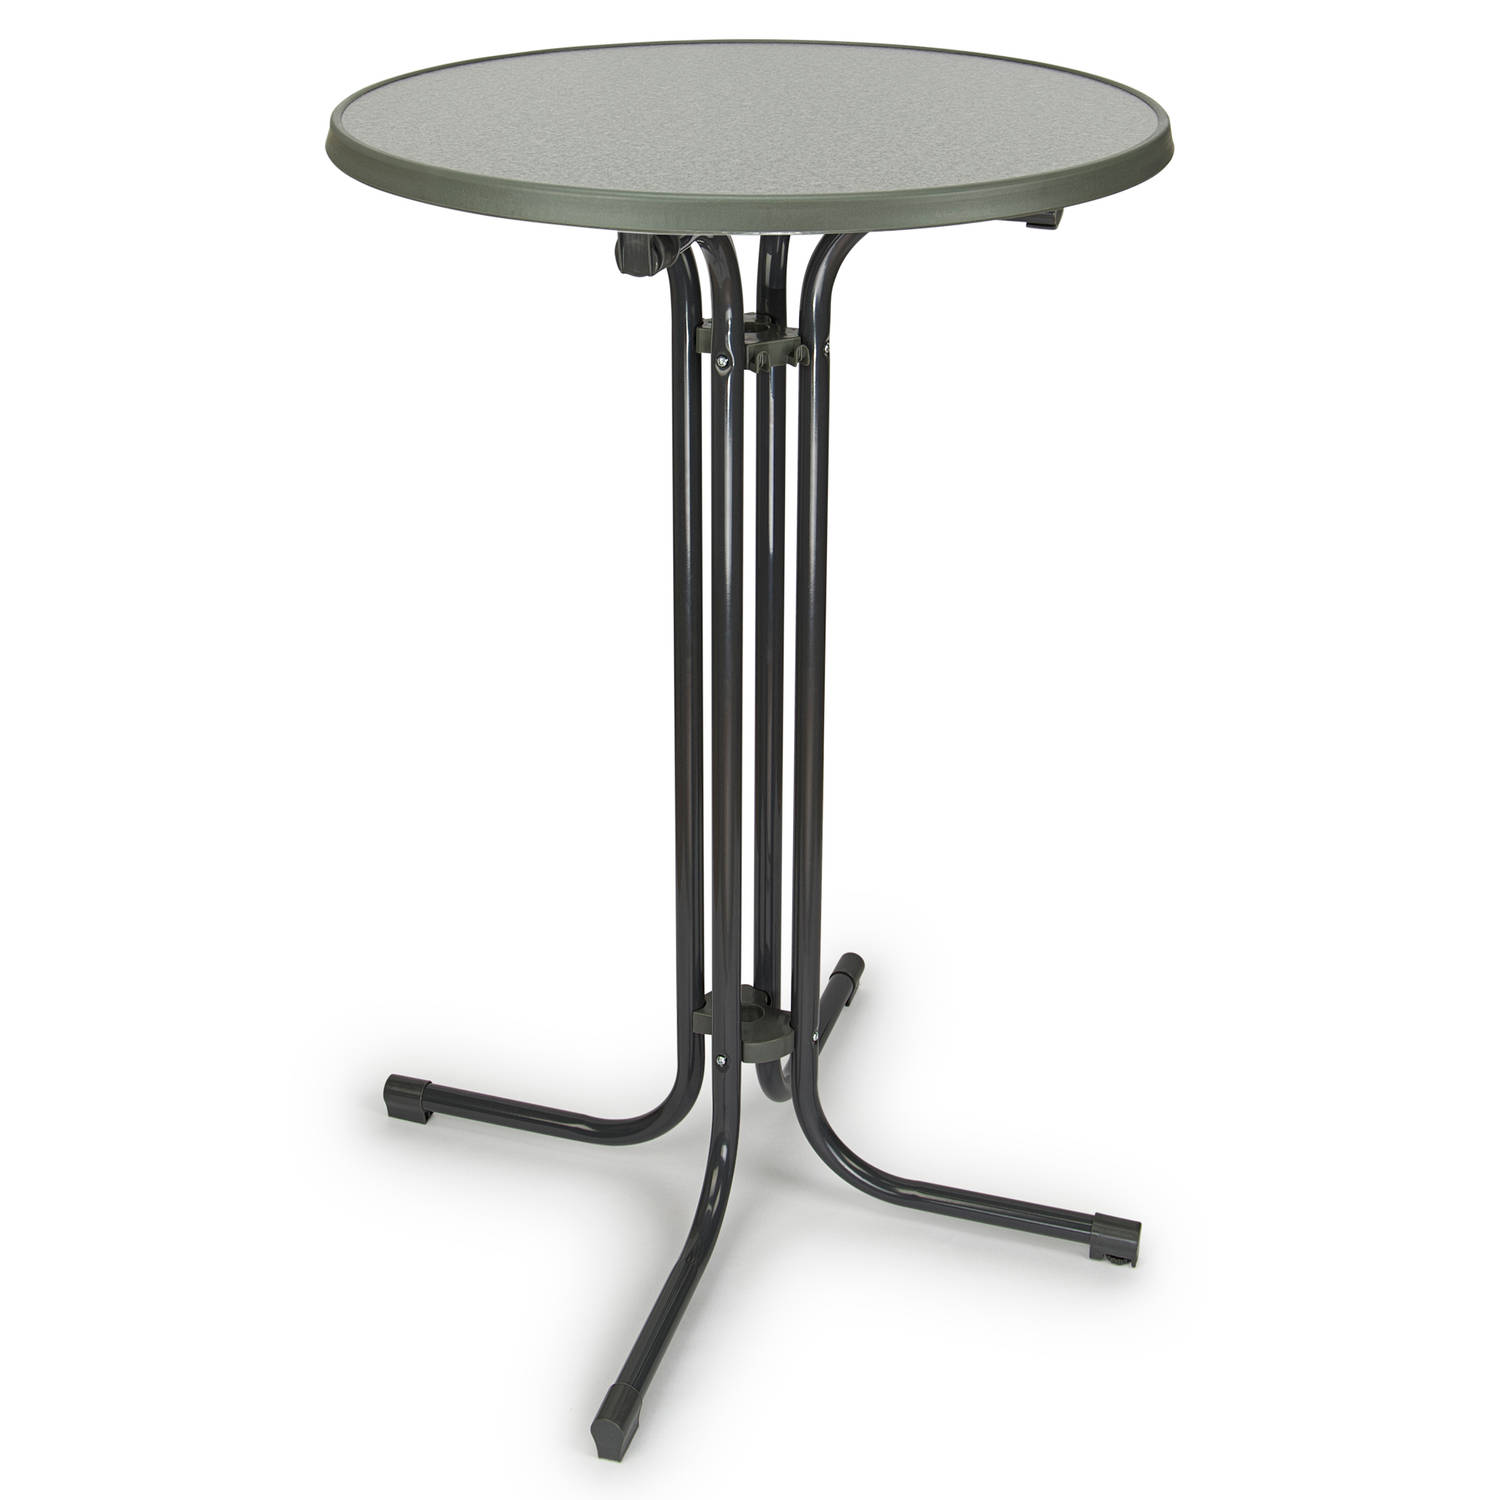 Wicotex-Statafel - grijs- 80cm doorsnede - statafels - cocktailtafel - hoge staan tafel - staantafels